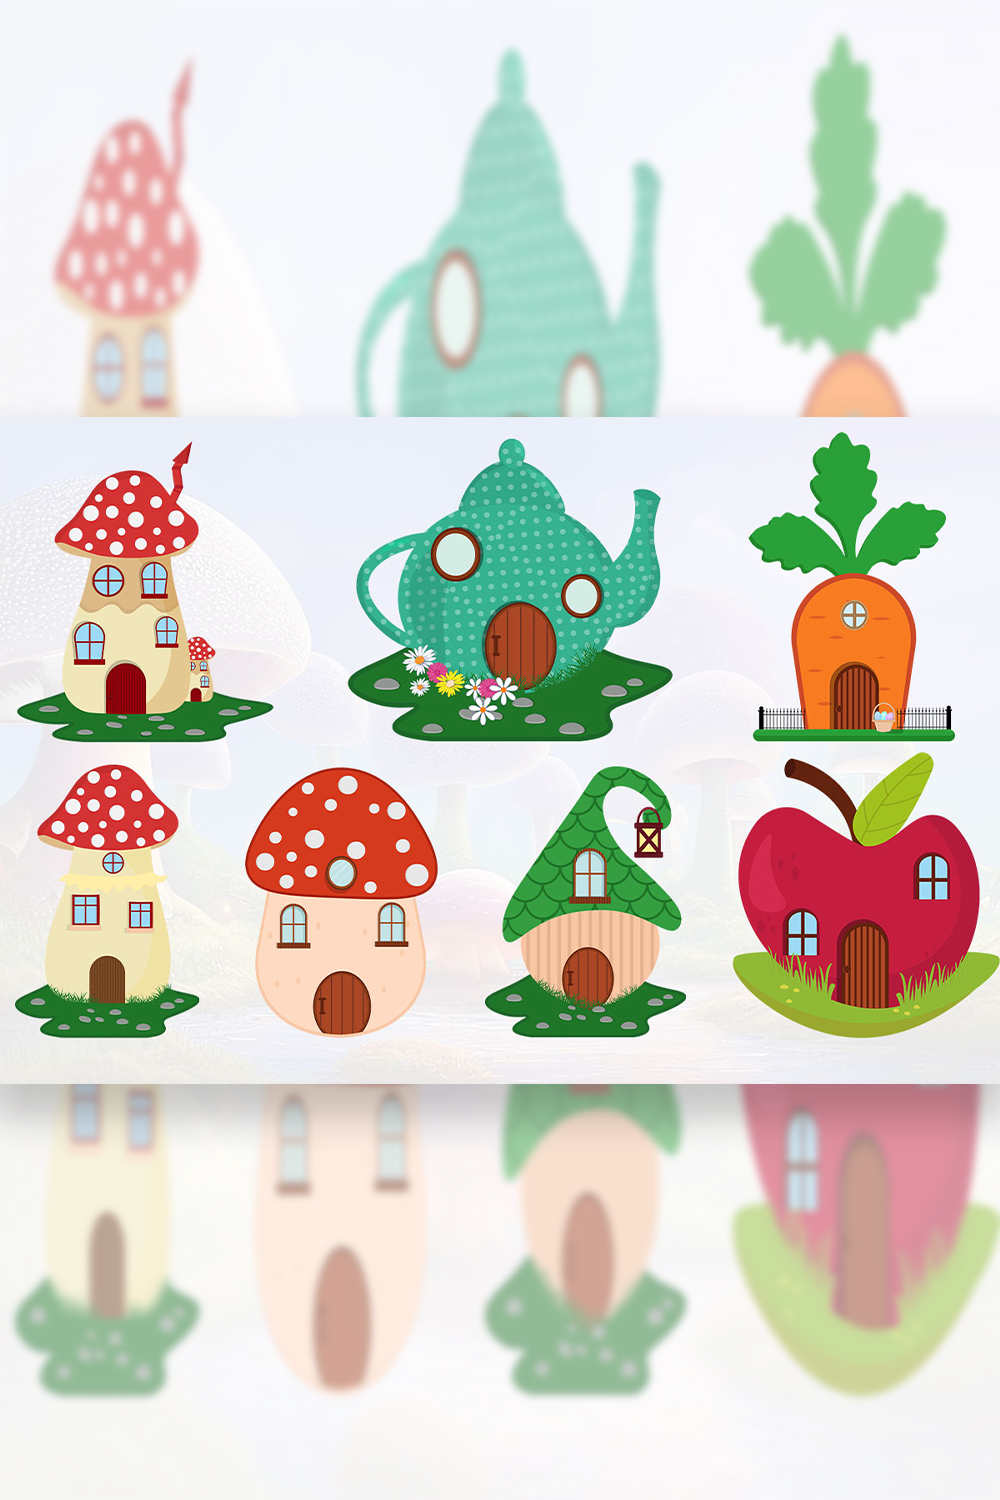 Cute Fairy Mushroom House clipart pinterest preview image.